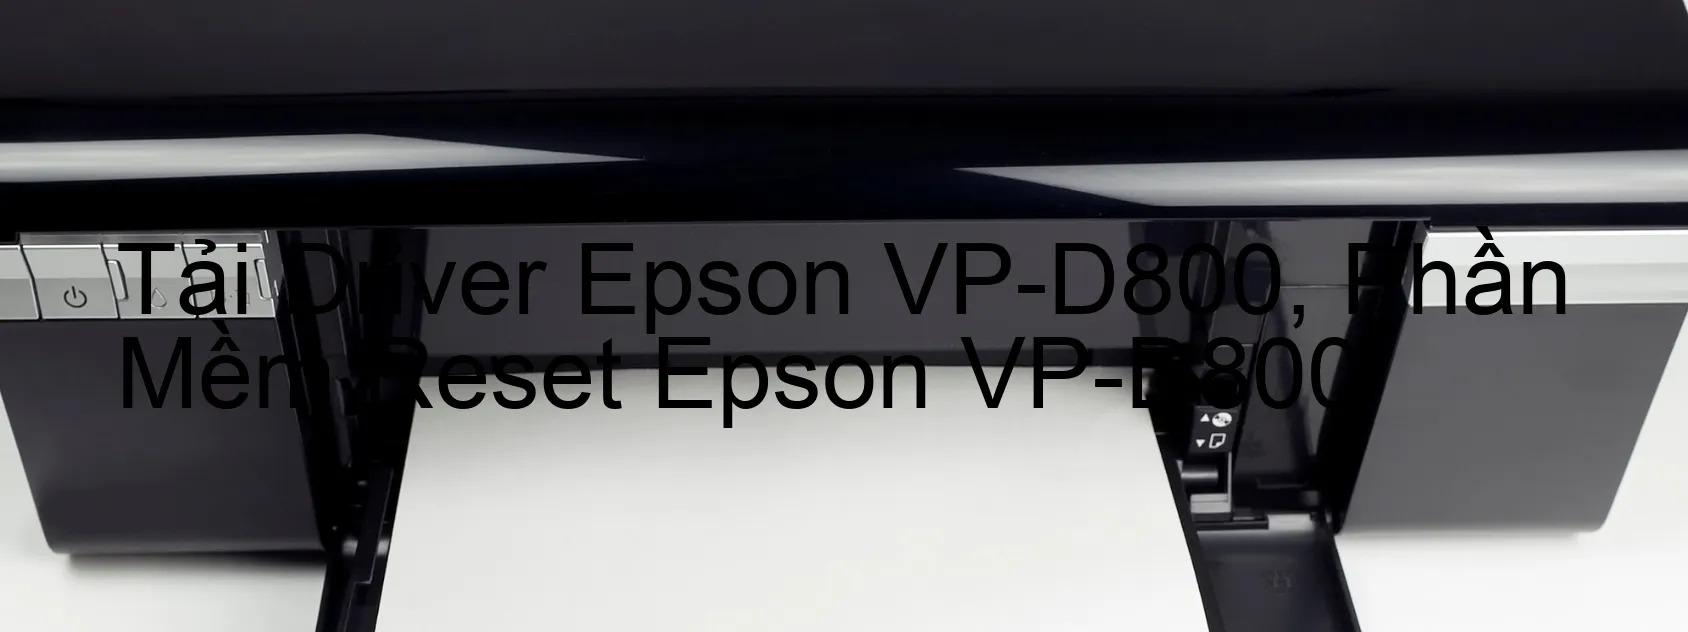 Driver Epson VP-D800, Phần Mềm Reset Epson VP-D800